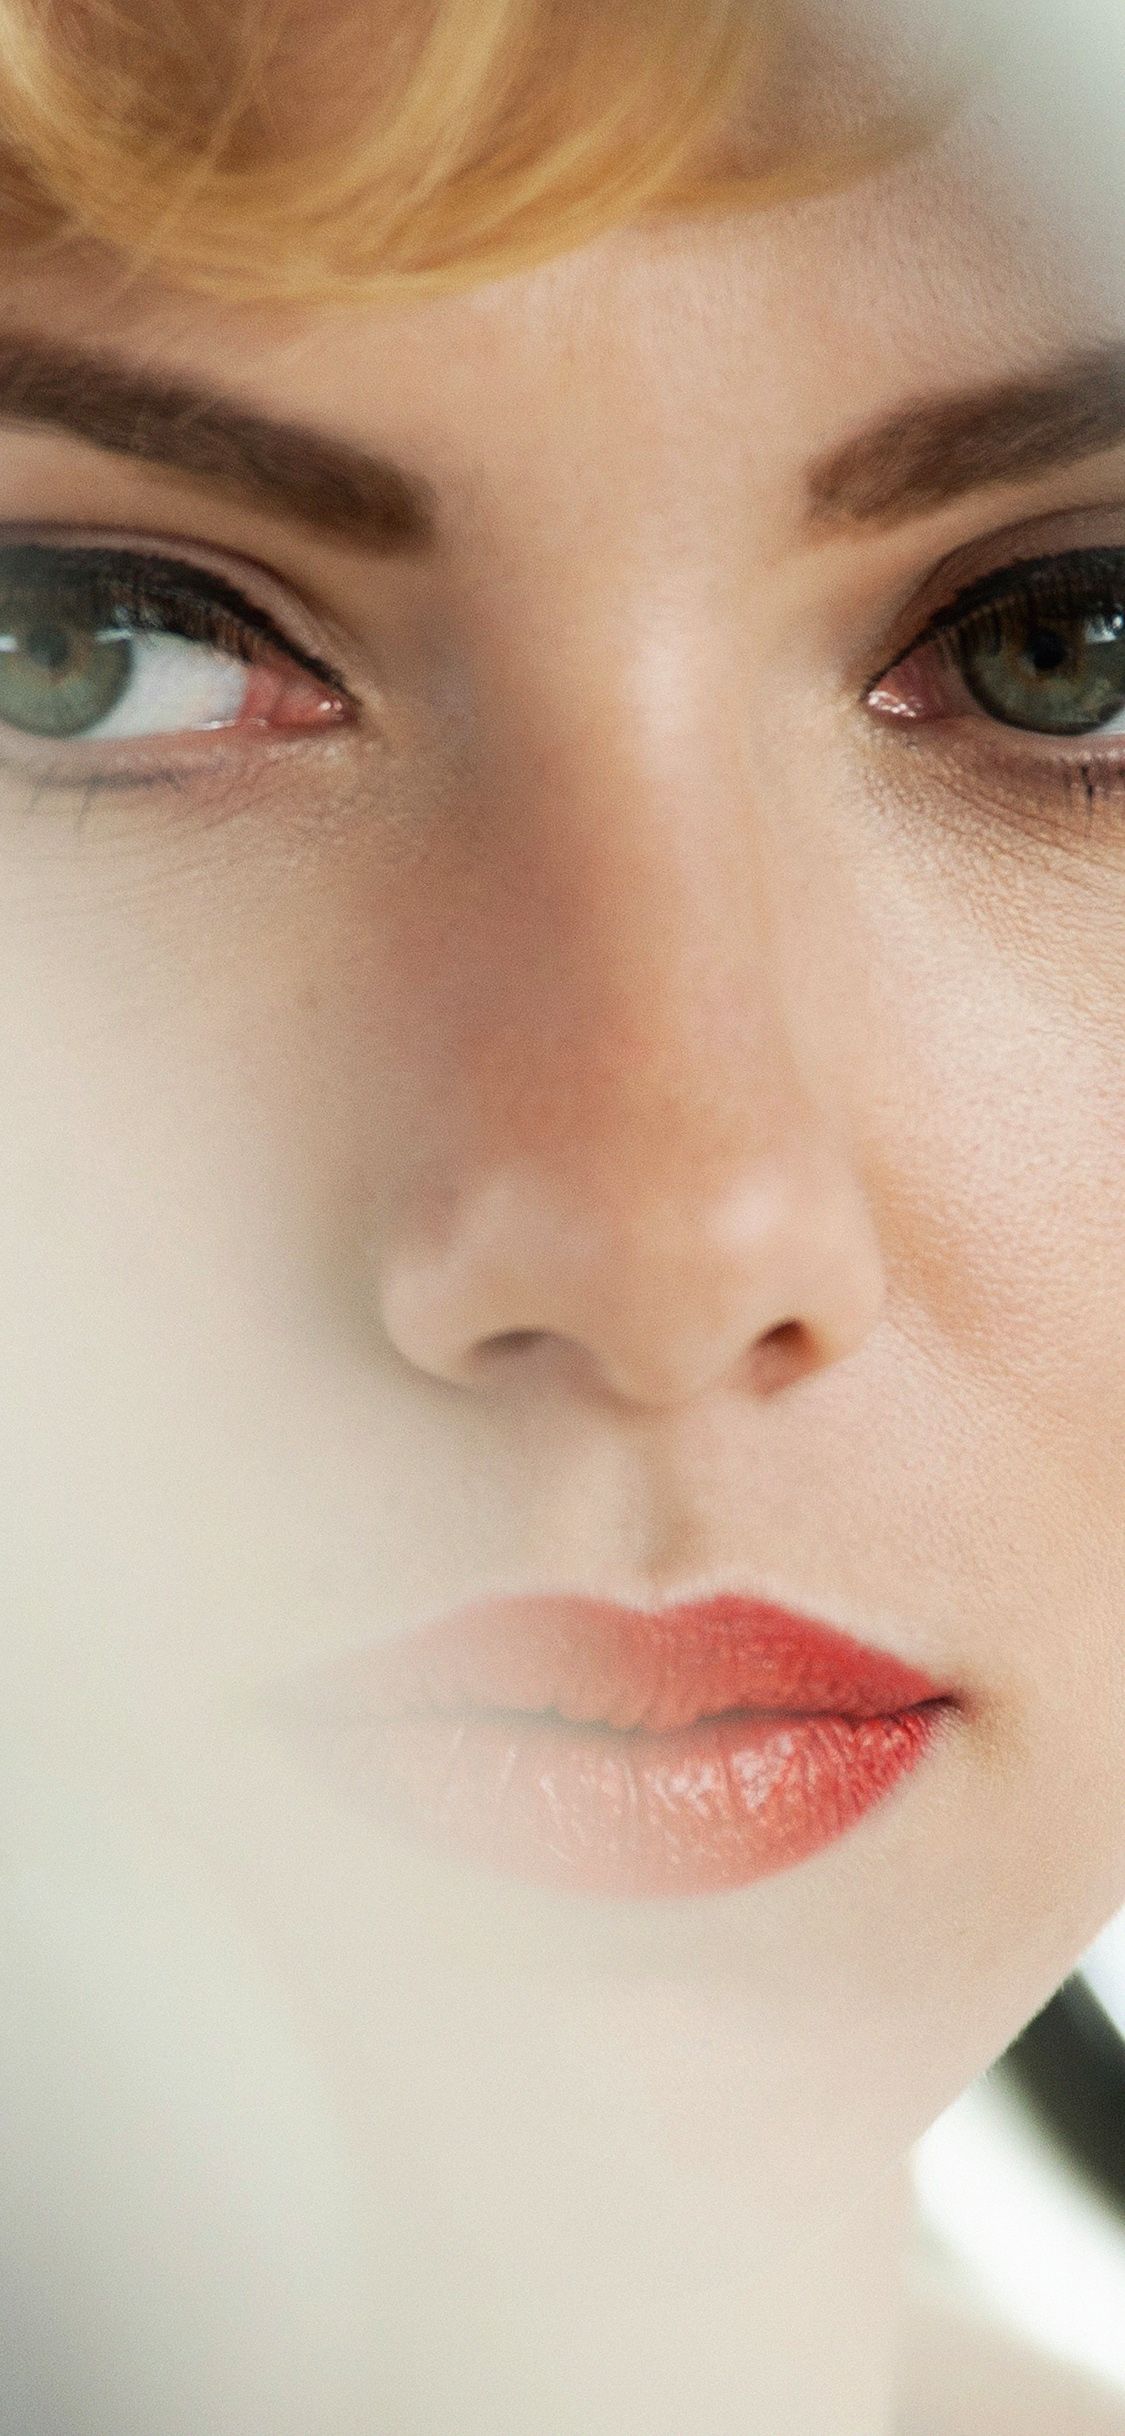 Scarlett Johansson Face Actress Celebrity Wallpaper